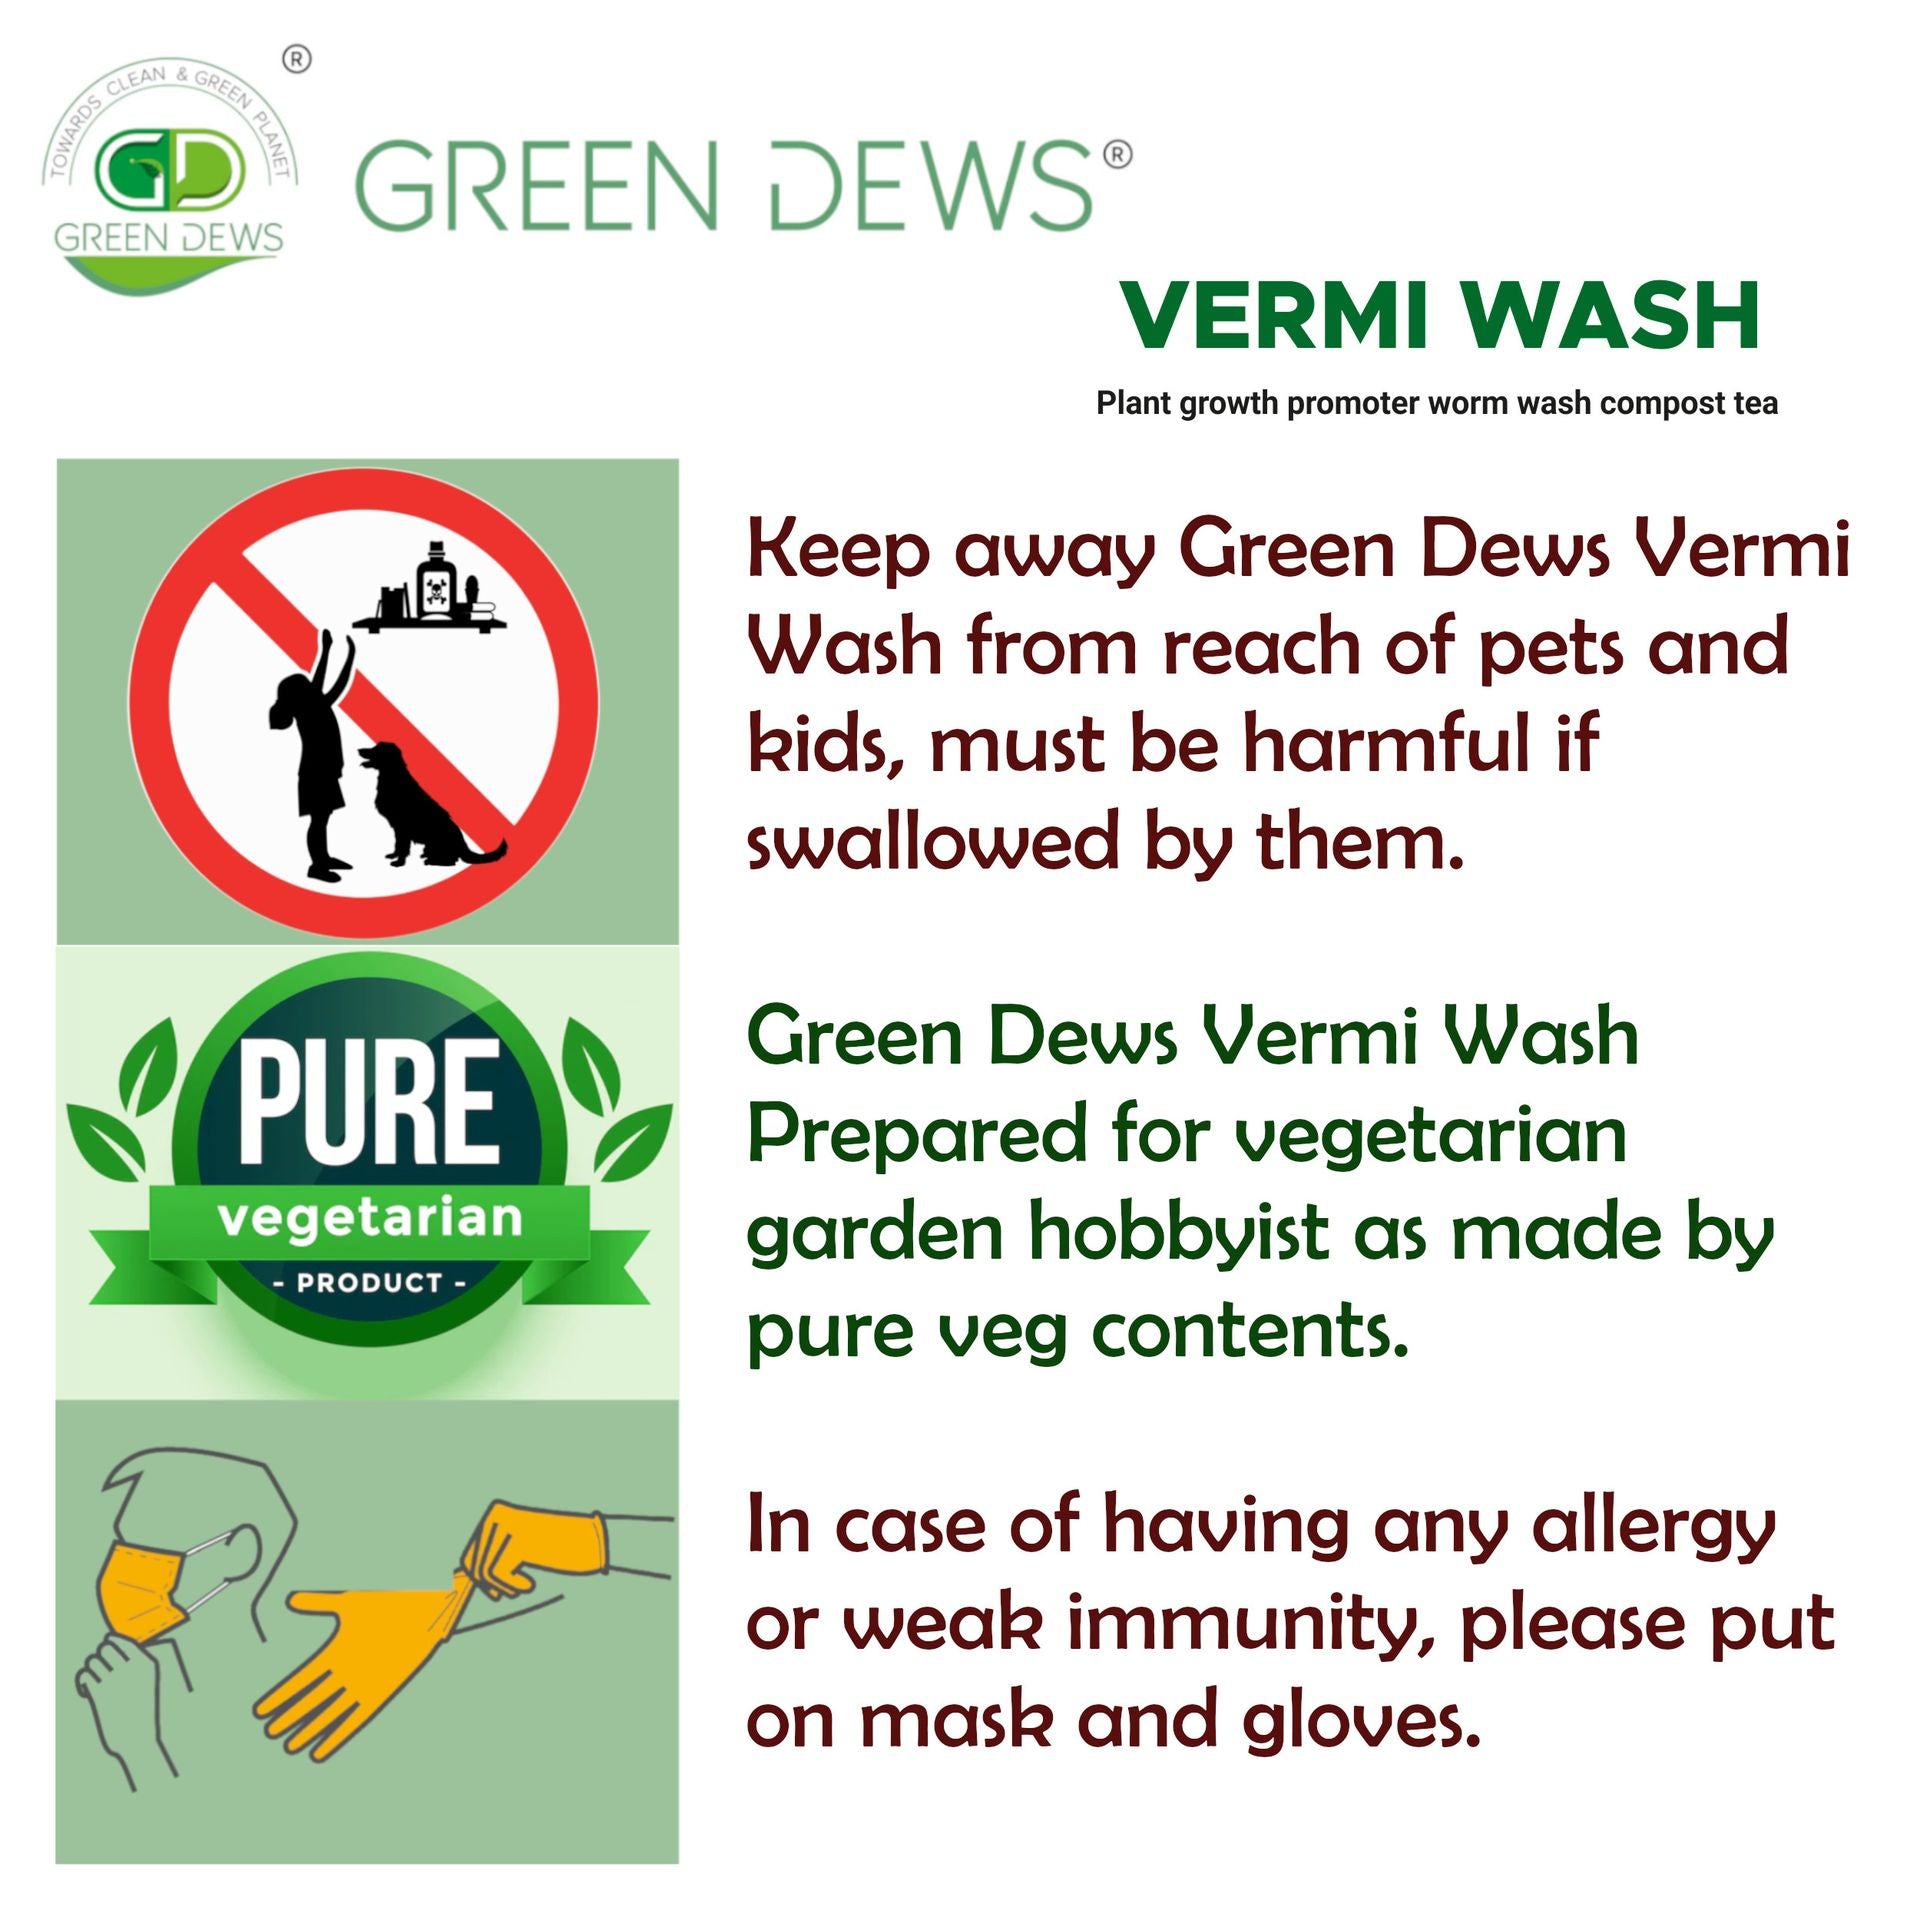 Green Dews Vermi Wash Worm Wash Vermi Water Compost Tea Liquid Plant Growth Promoter Liquid Manure for Plants Growth Booster - hfnl!fe